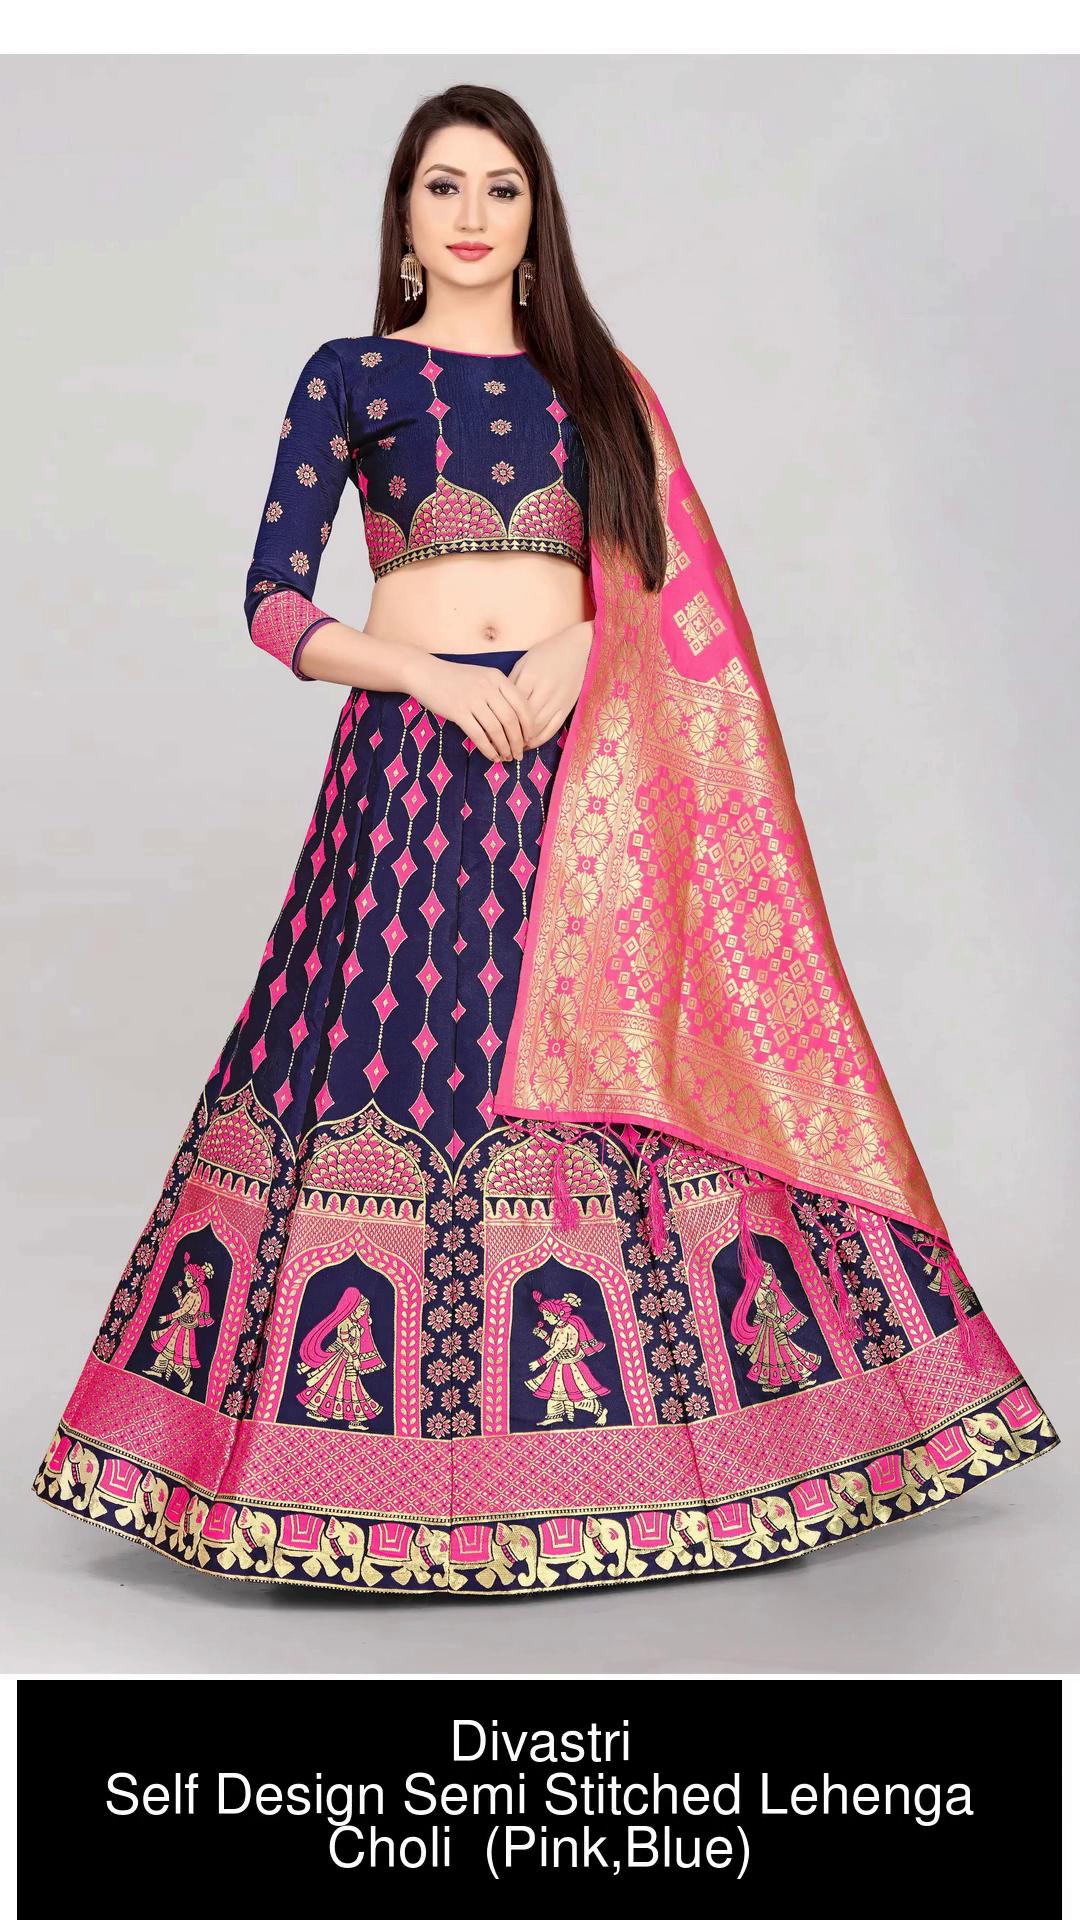 Buy kp Fashion Girl Indian Brocade Self Design Lehenga & Choli Set -  maroon,Ethnic Wear, Girl Dresses,Silk Lehenga Choli (10-11 Years, maroon)  at Amazon.in